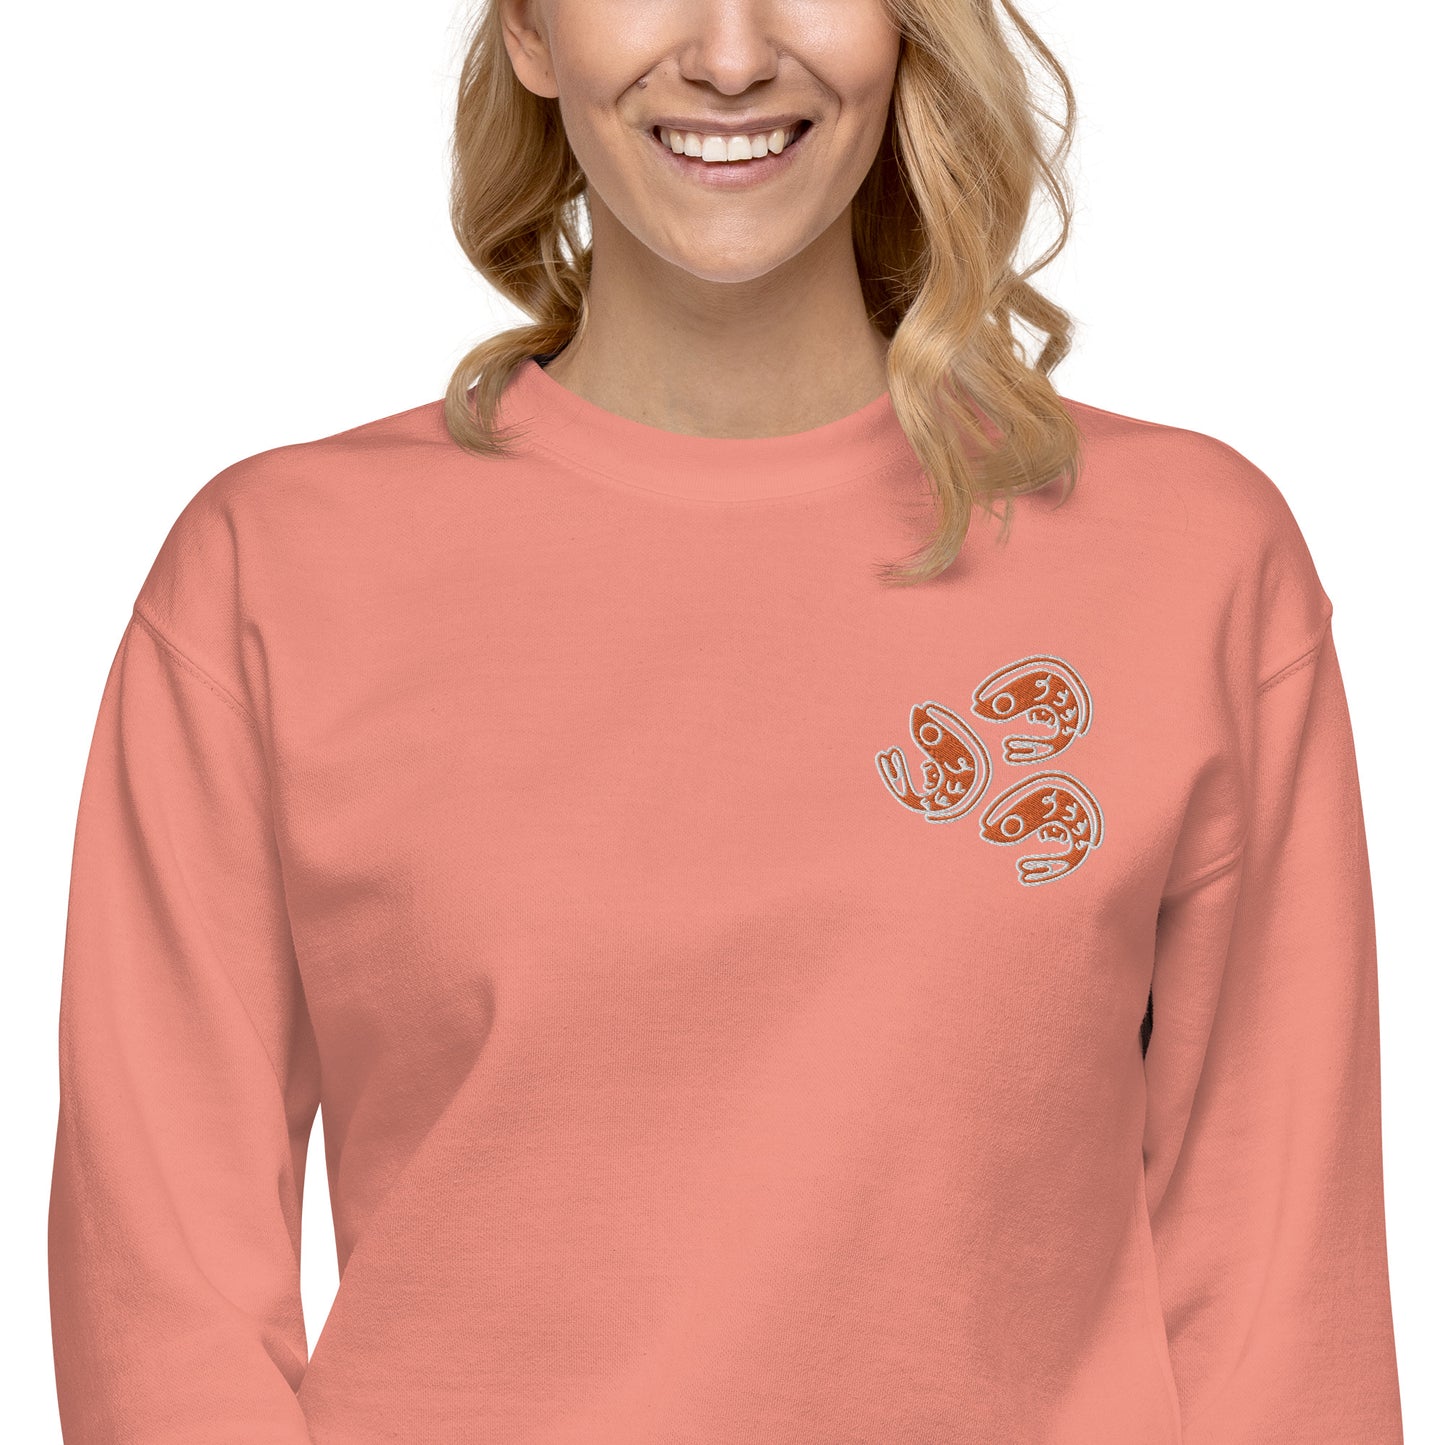 The Shrimpy Sweatshirt